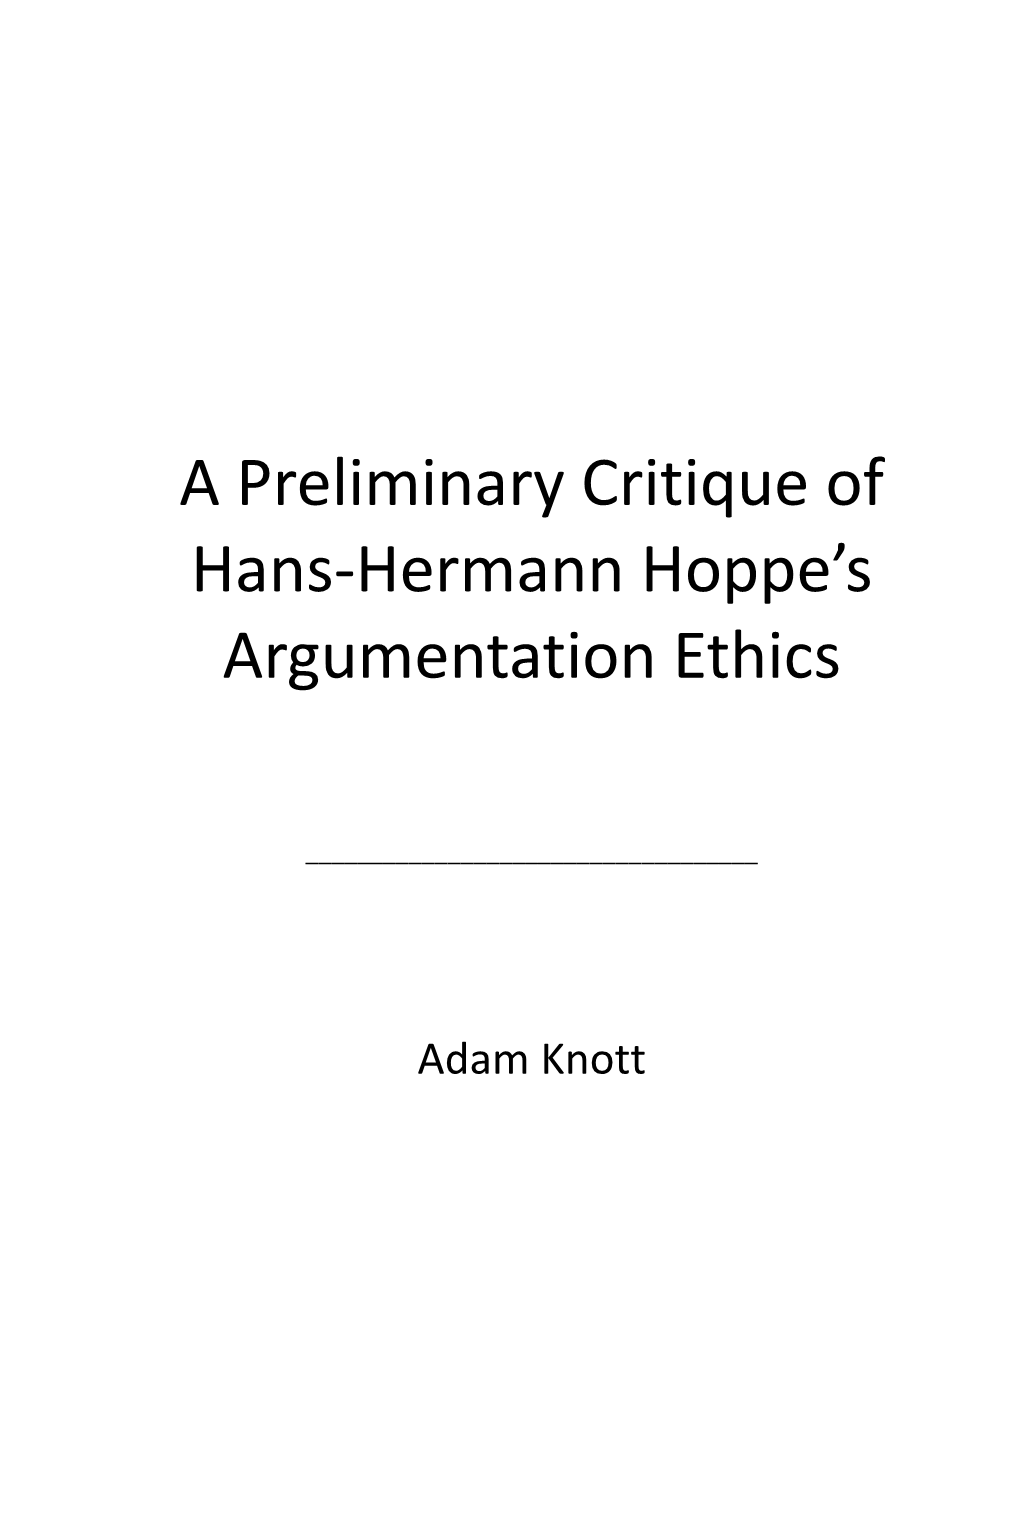 A Preliminary Critique of Hans-Hermann Hoppe's